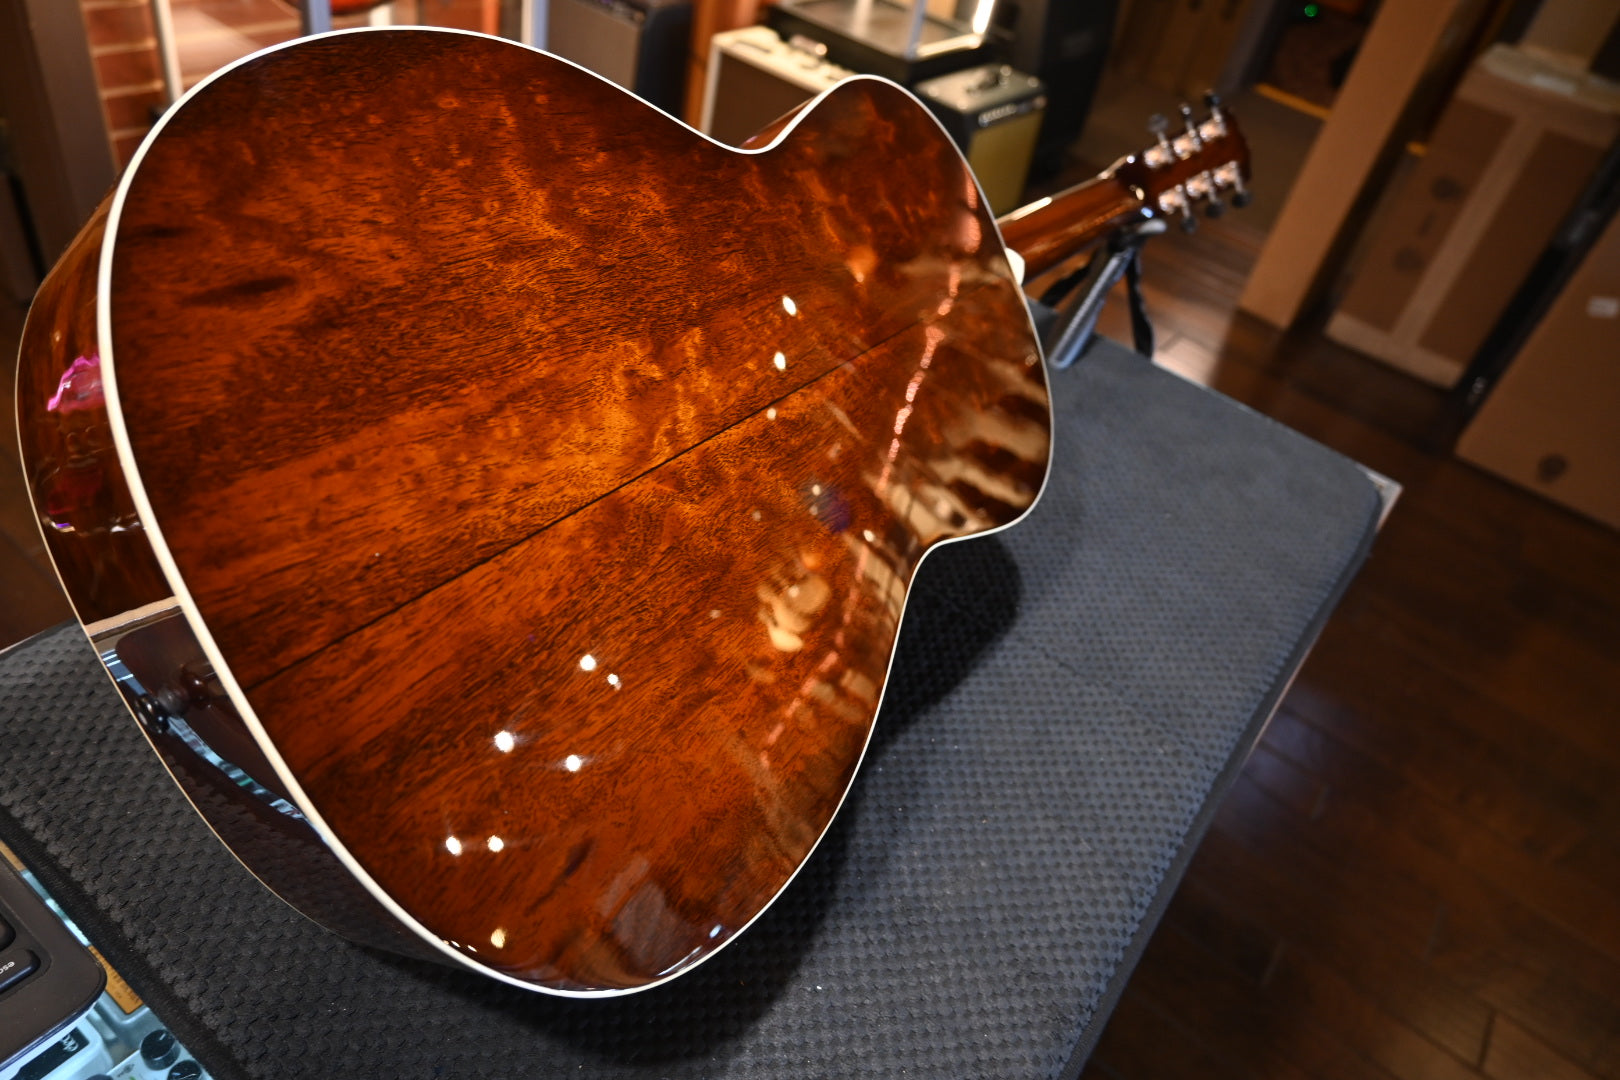 Santa Cruz Catfish Special Pro Figured Mahogany Guitar #403 - Danville Music